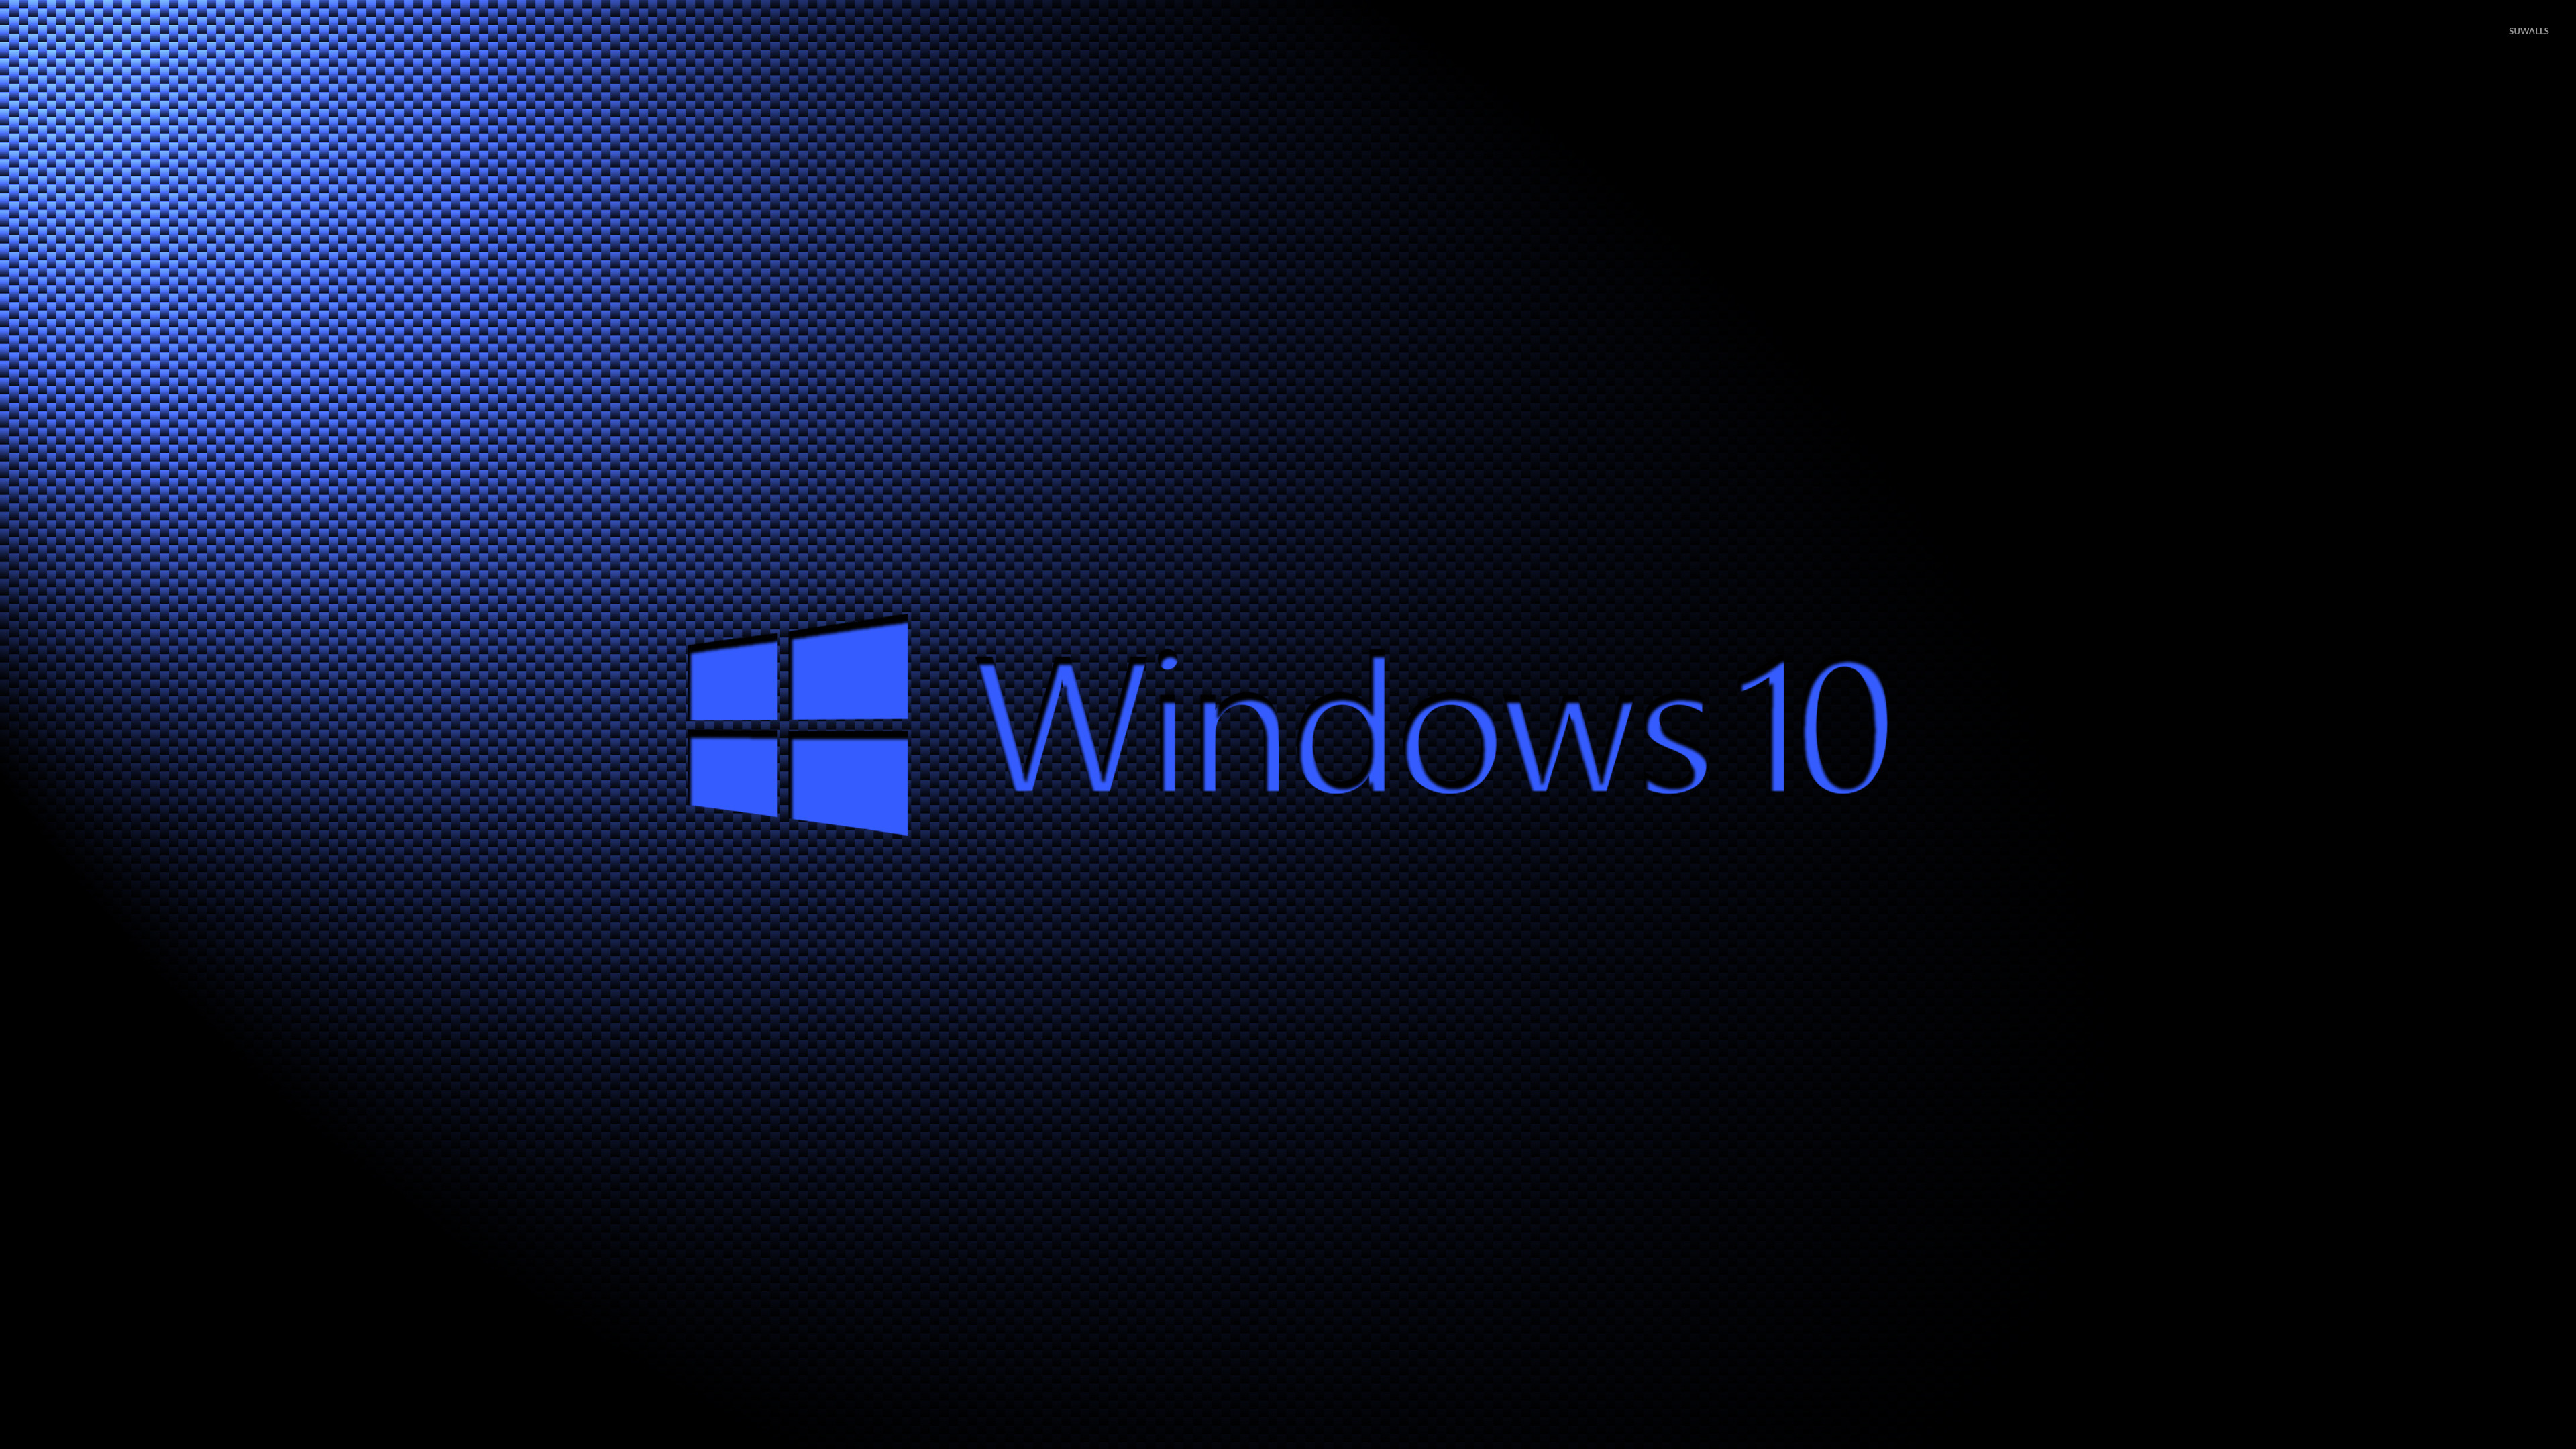 Windows 10 blue text logo on carbon fiber wallpaper - Computer wallpapers -  #46675